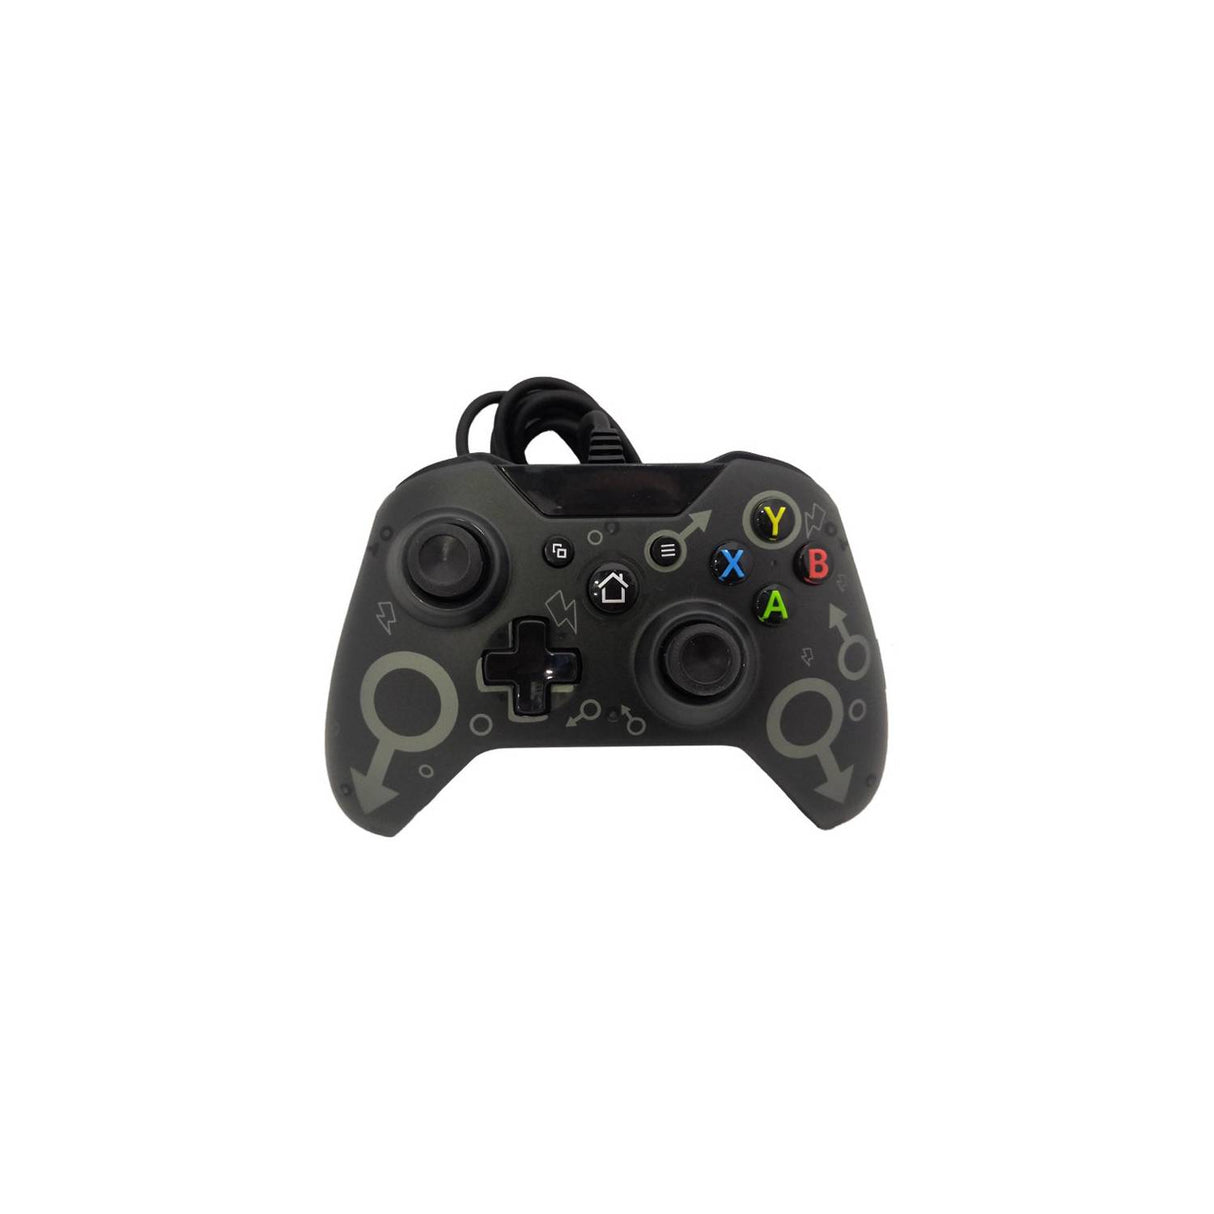 Joystick Mando Control Xbox 360 Pc Cable Alternativo Color Negro